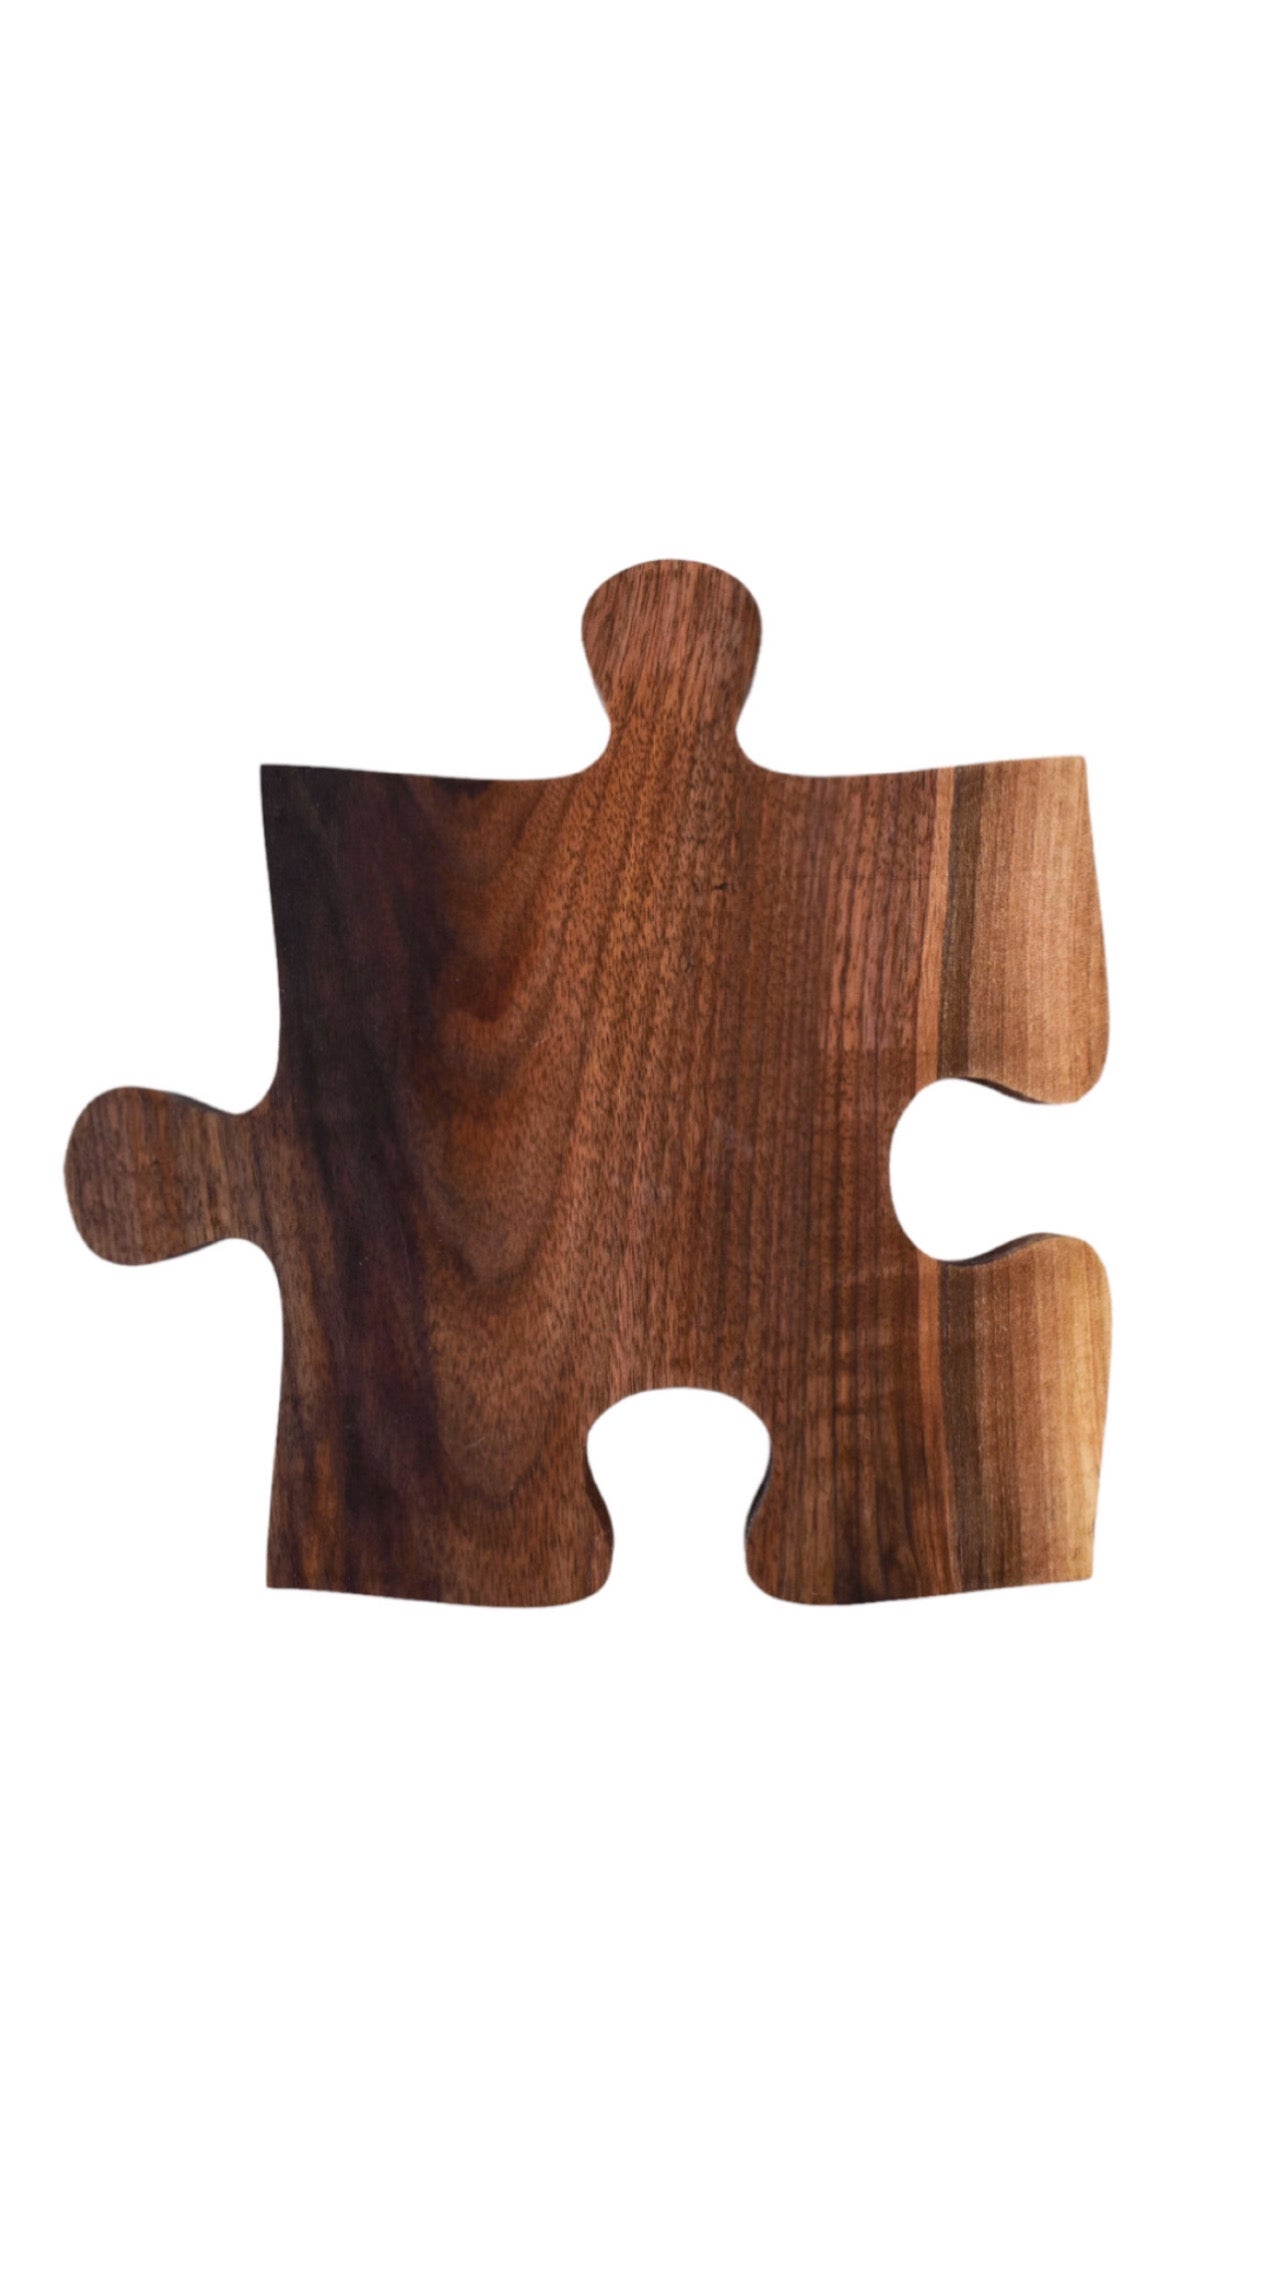 Puzzle Piece Serving Boards